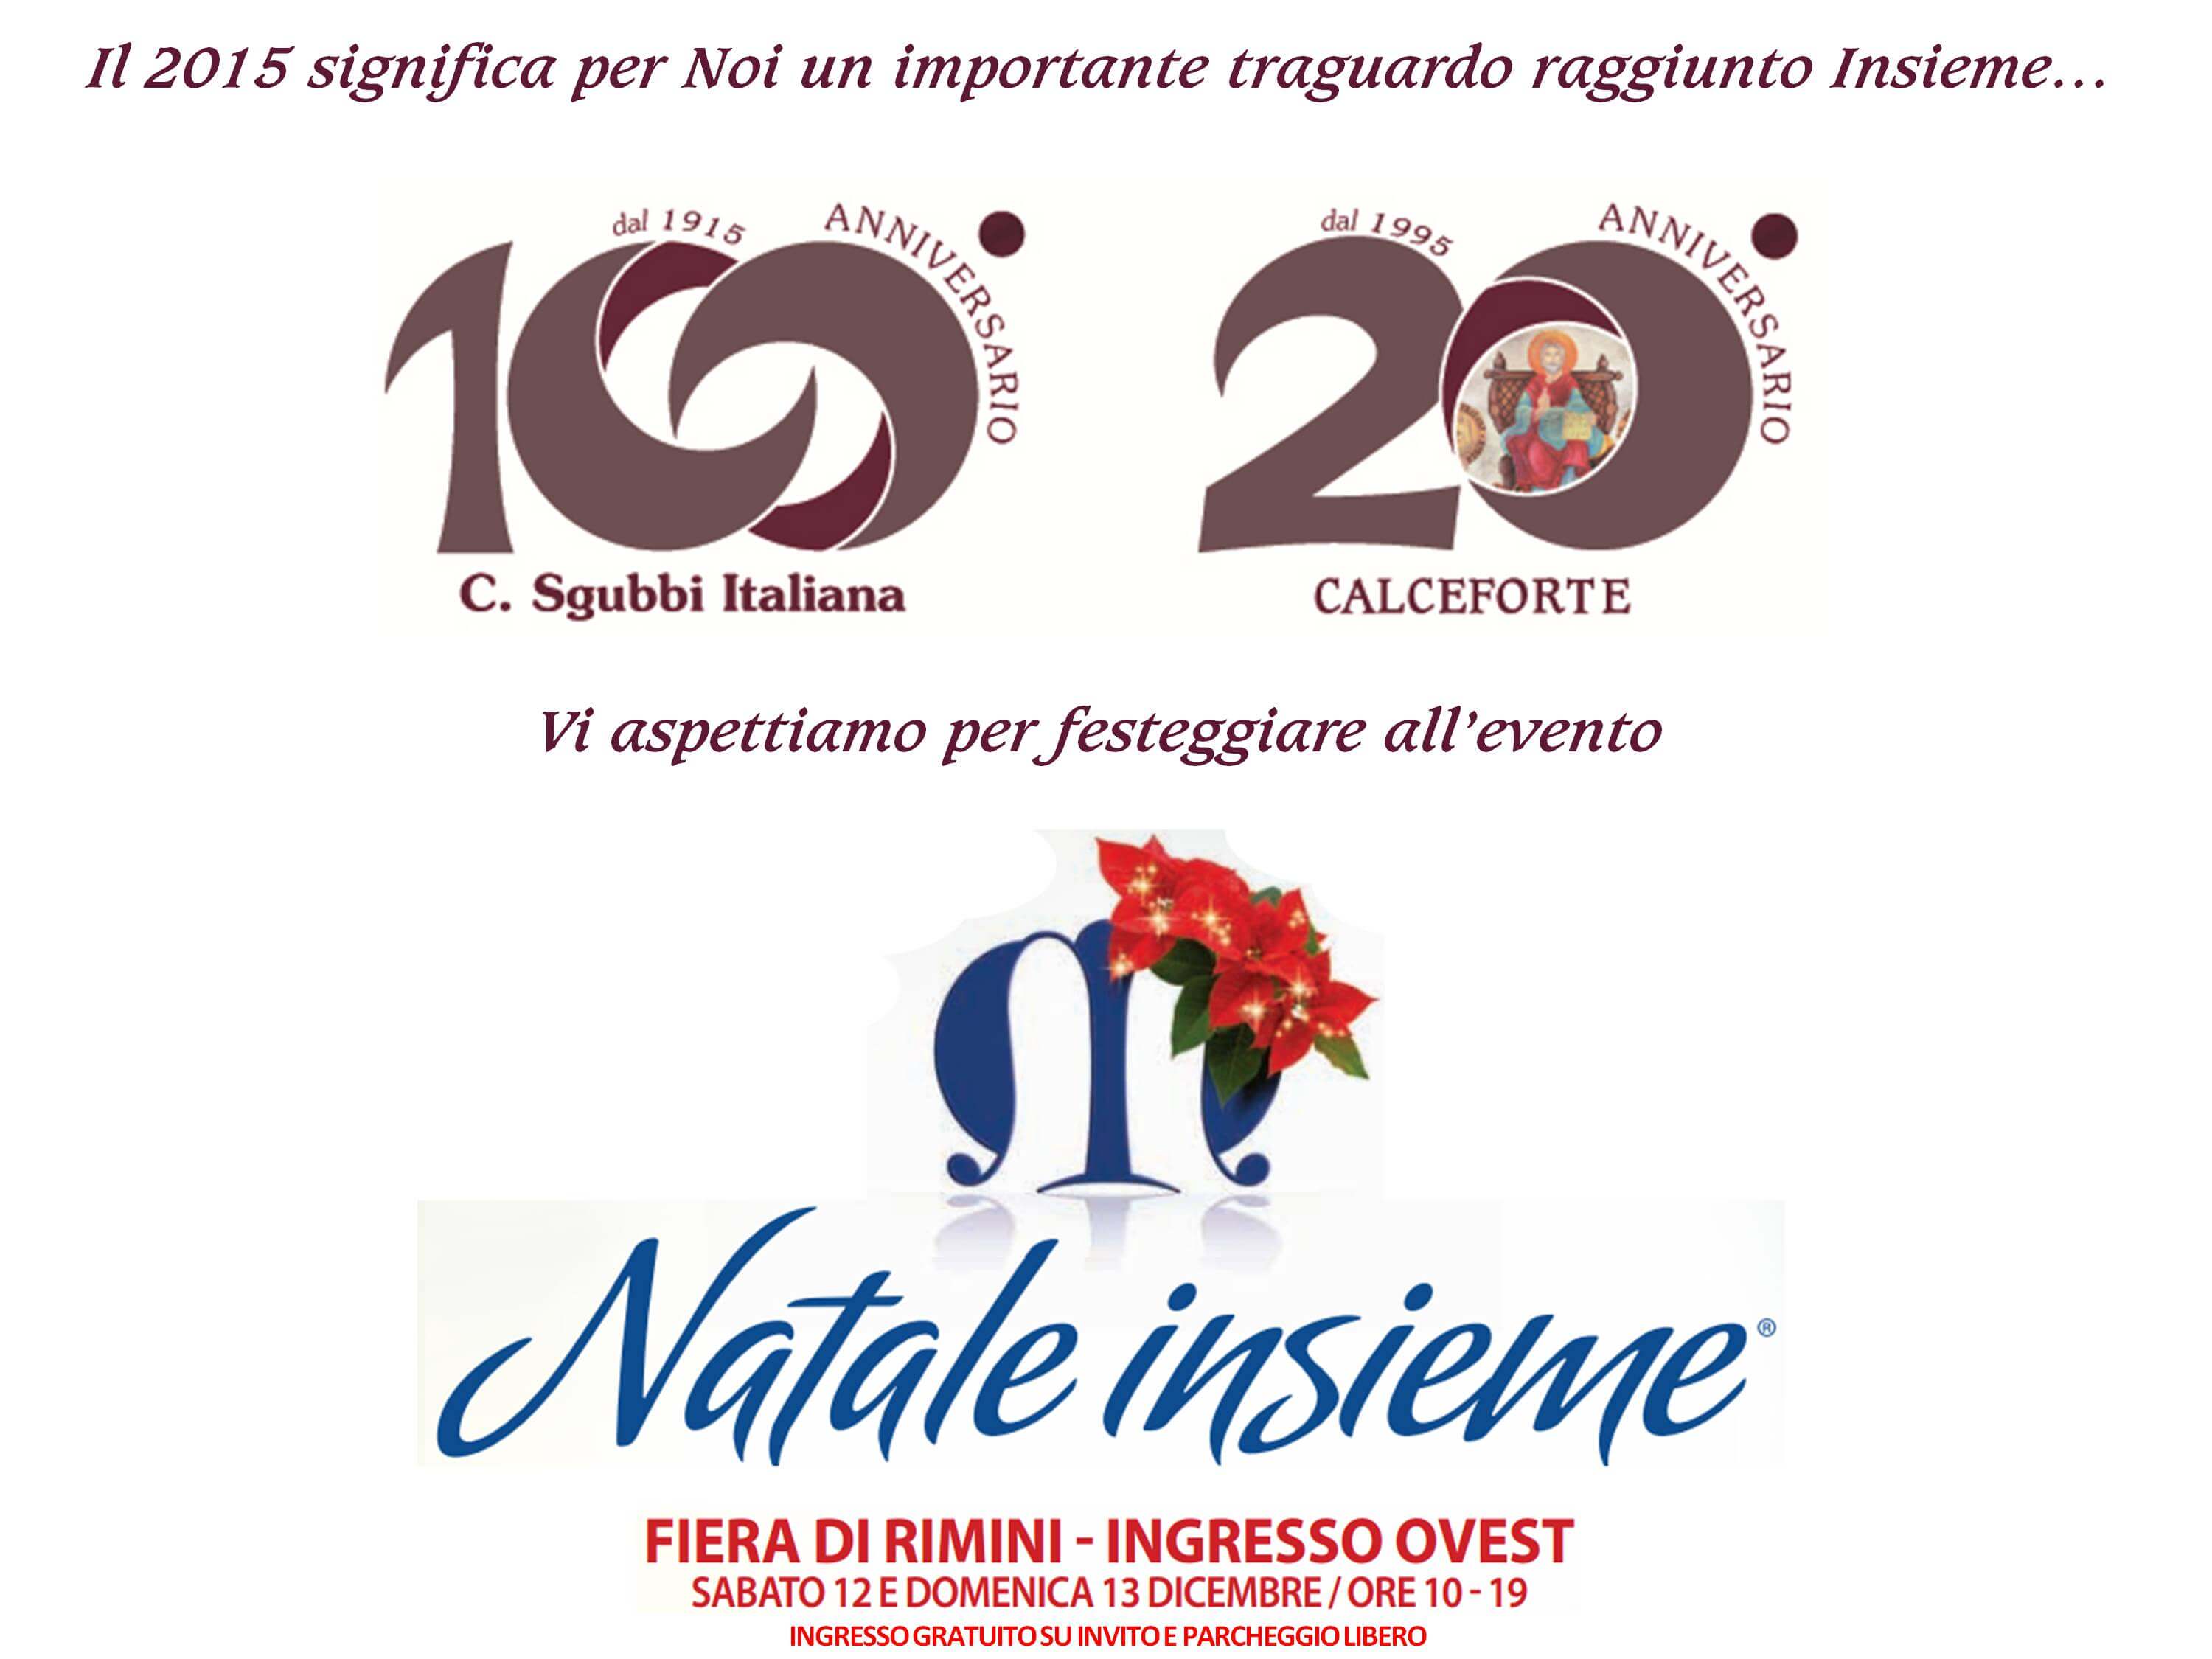 C. Sgubbi Italiana a Natale insieme 2015